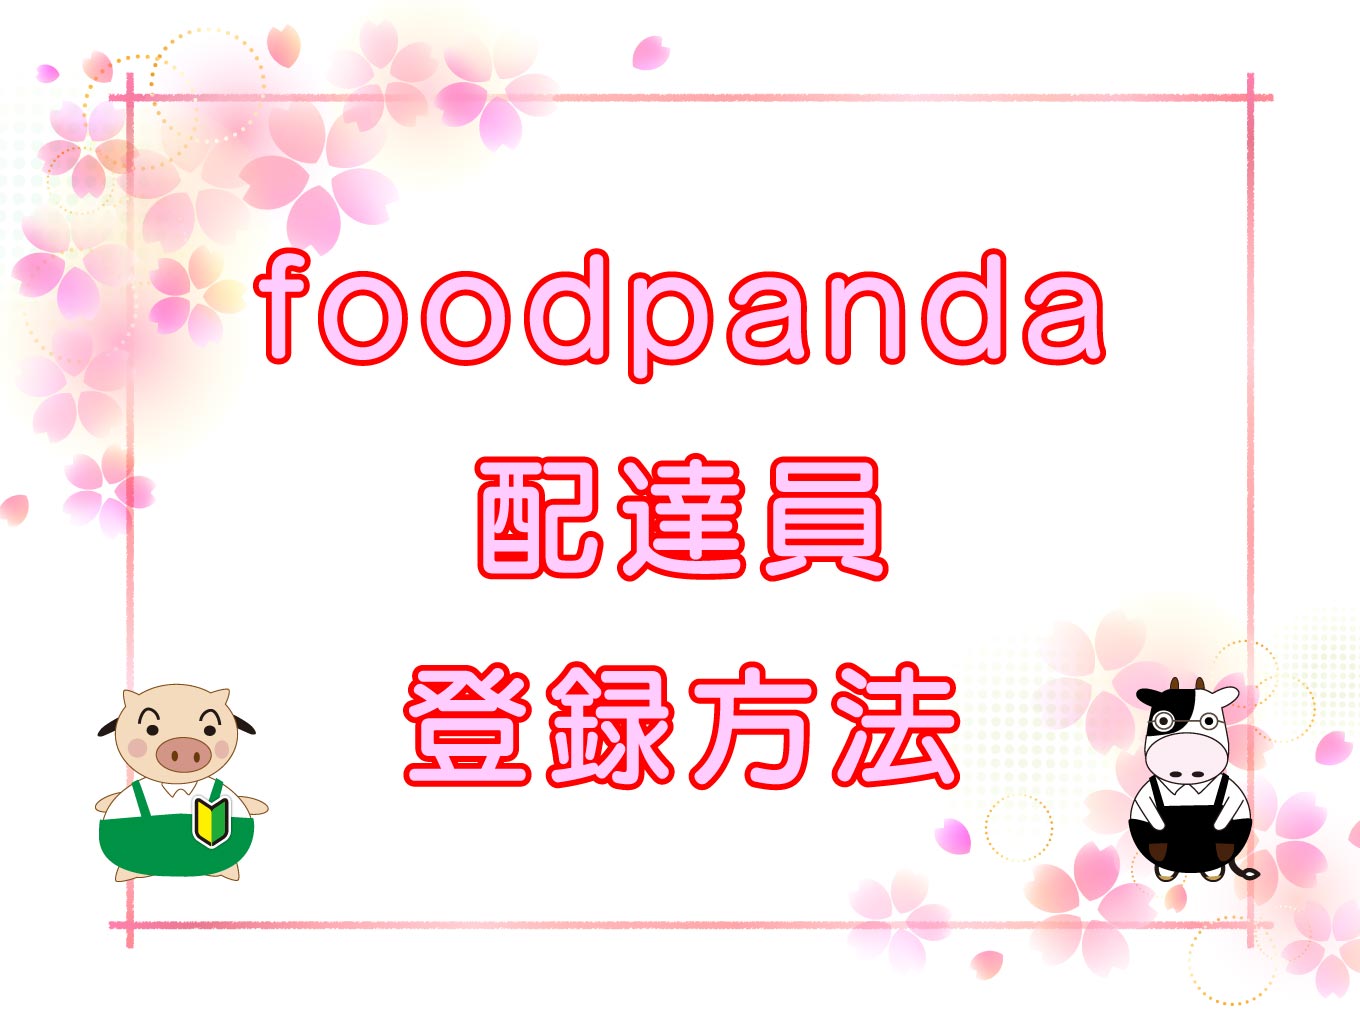 Foodpanda touroku top